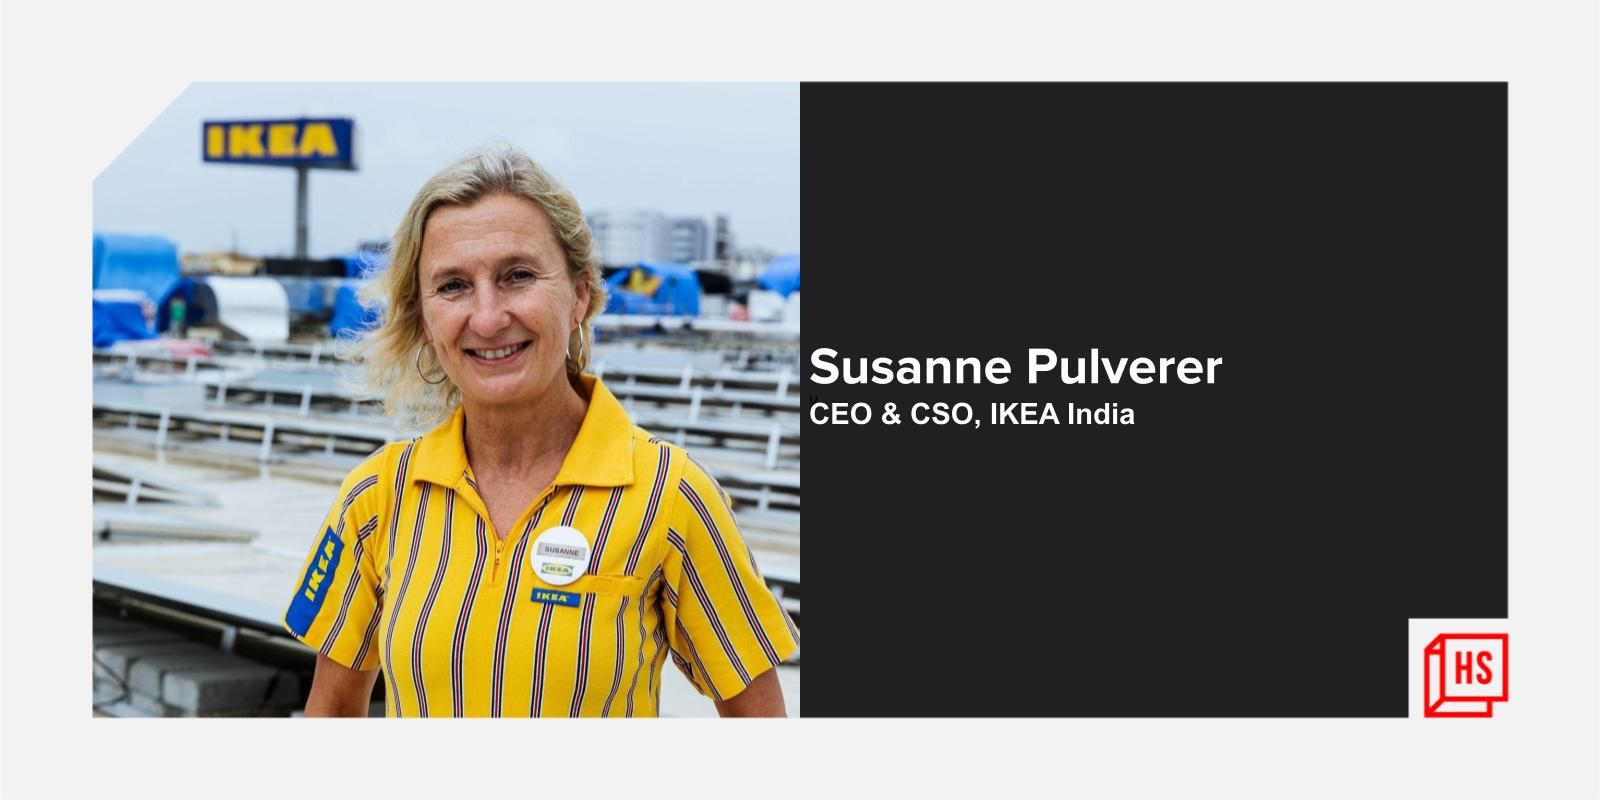 Meet IKEA India’s first female CEO: Susanne Pulverer
